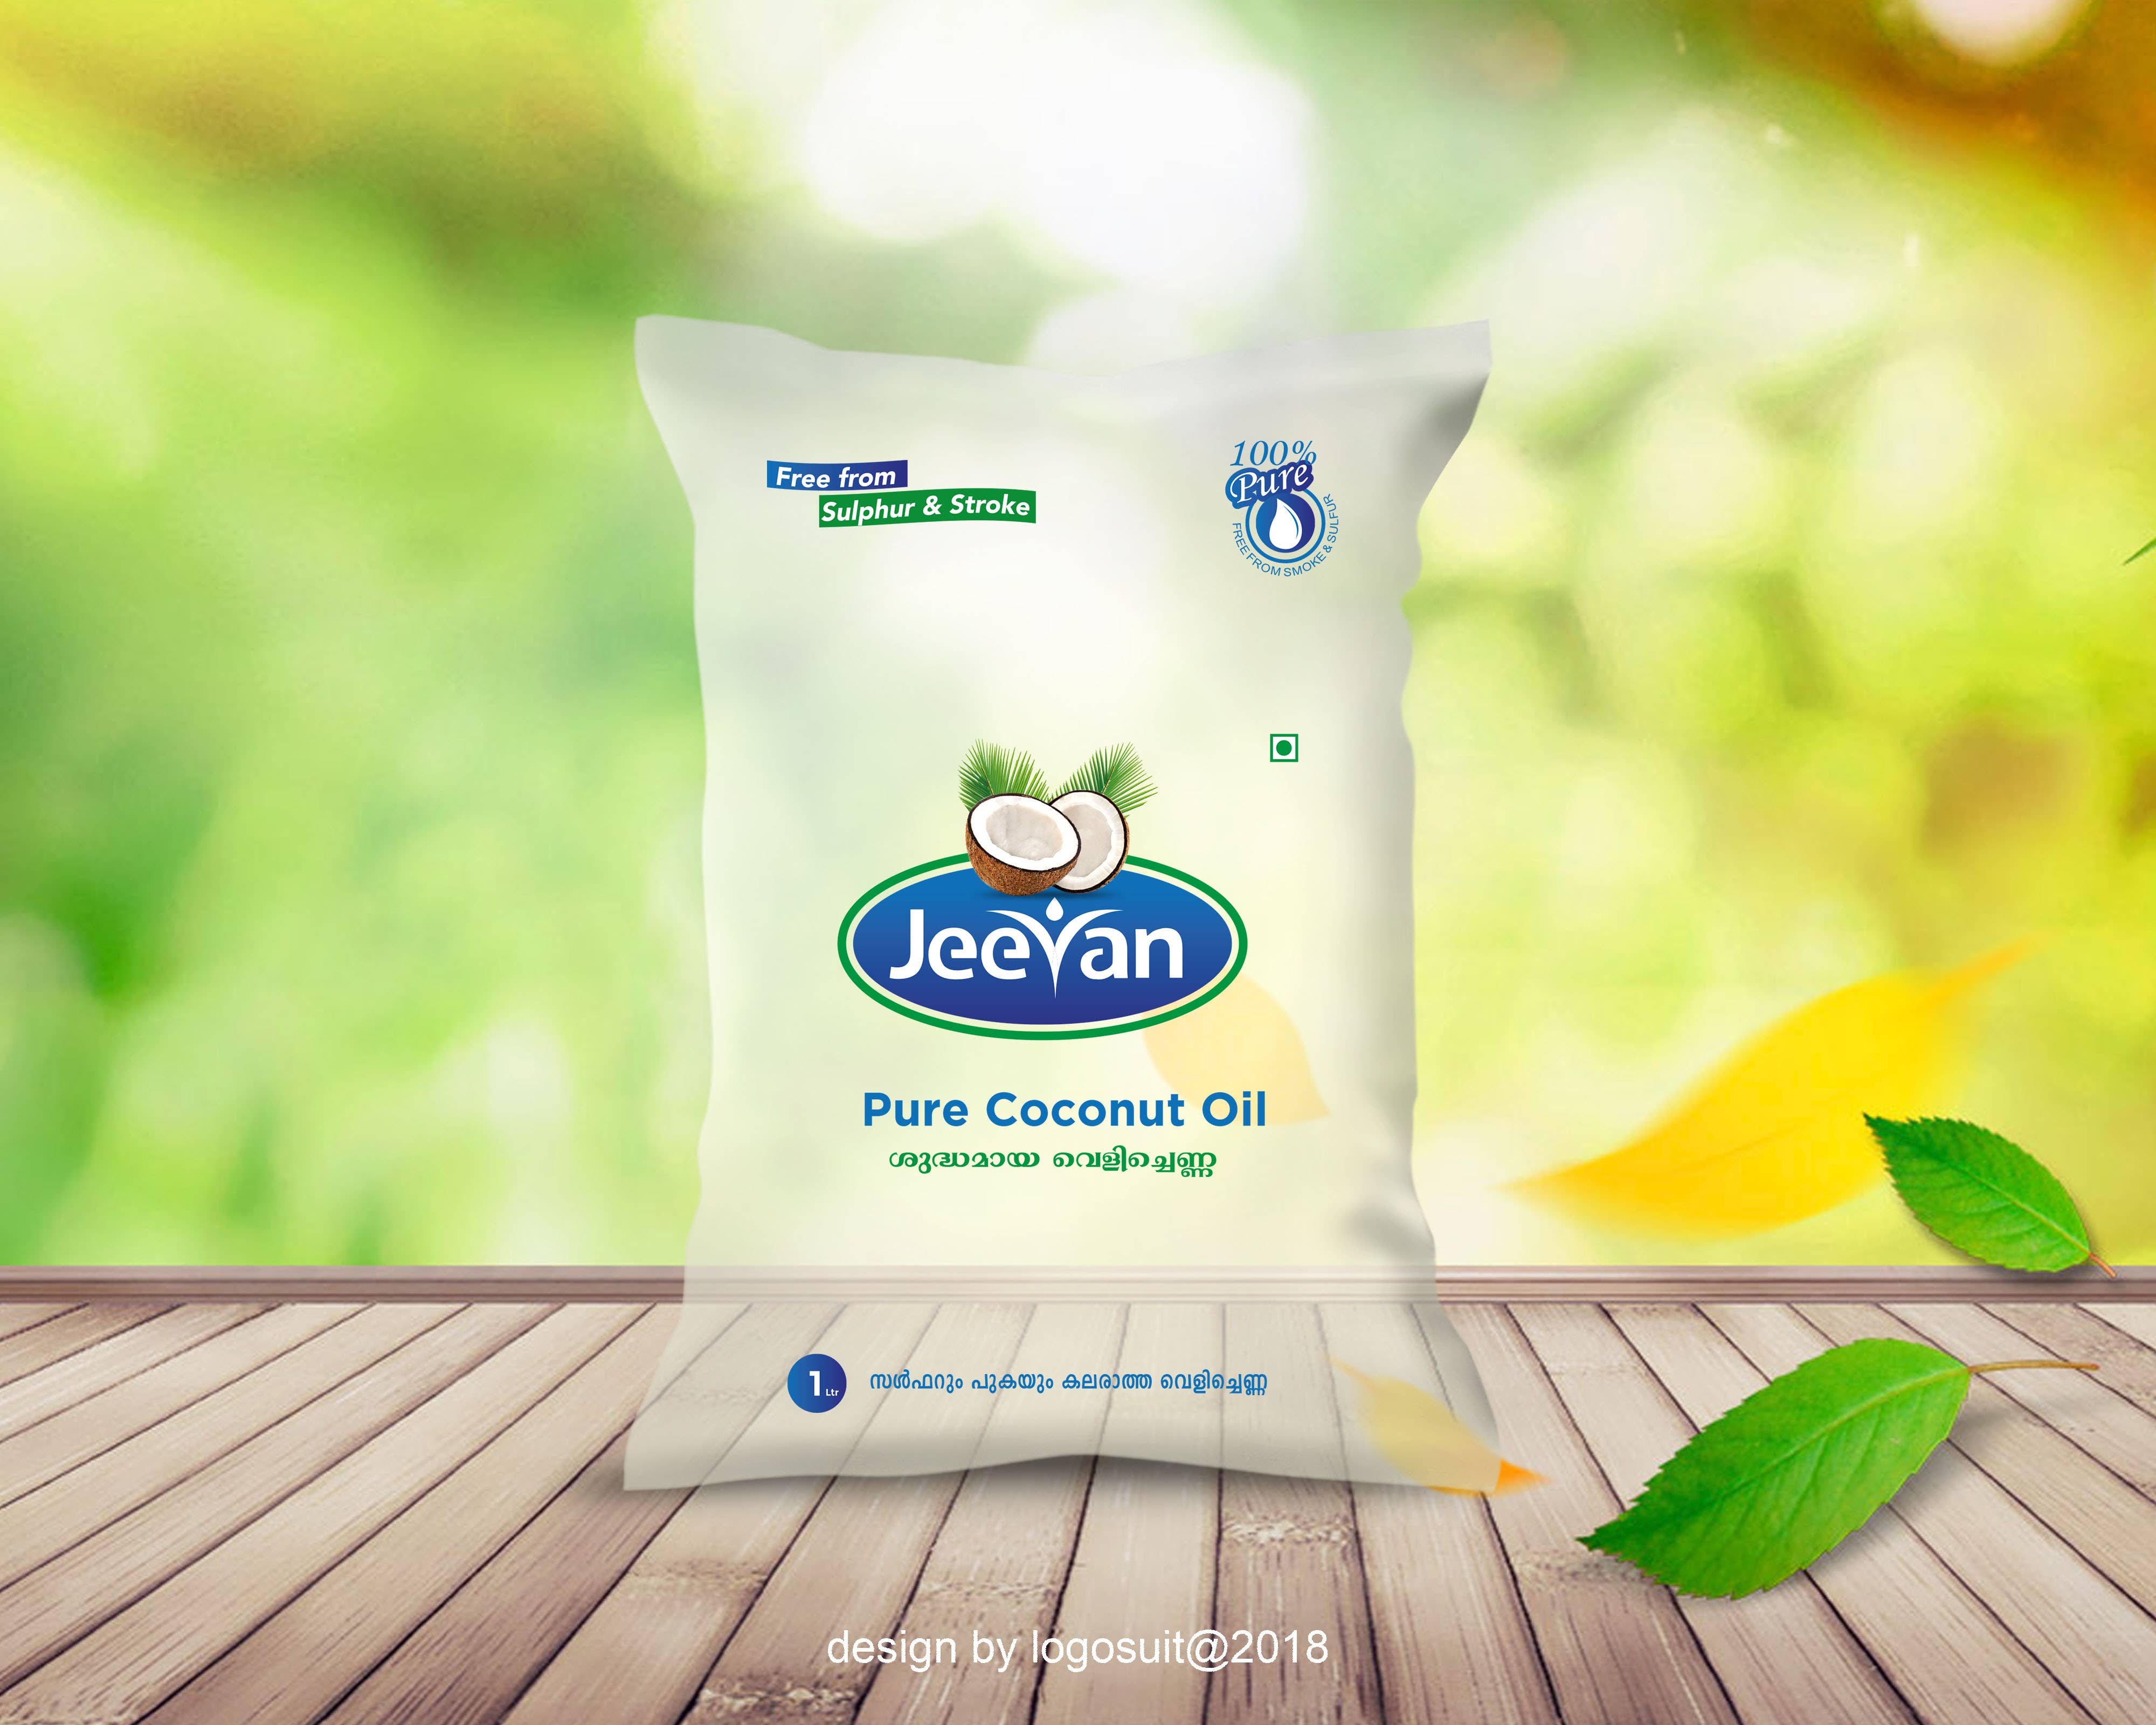 Jeevan Coconut Oil Package Design